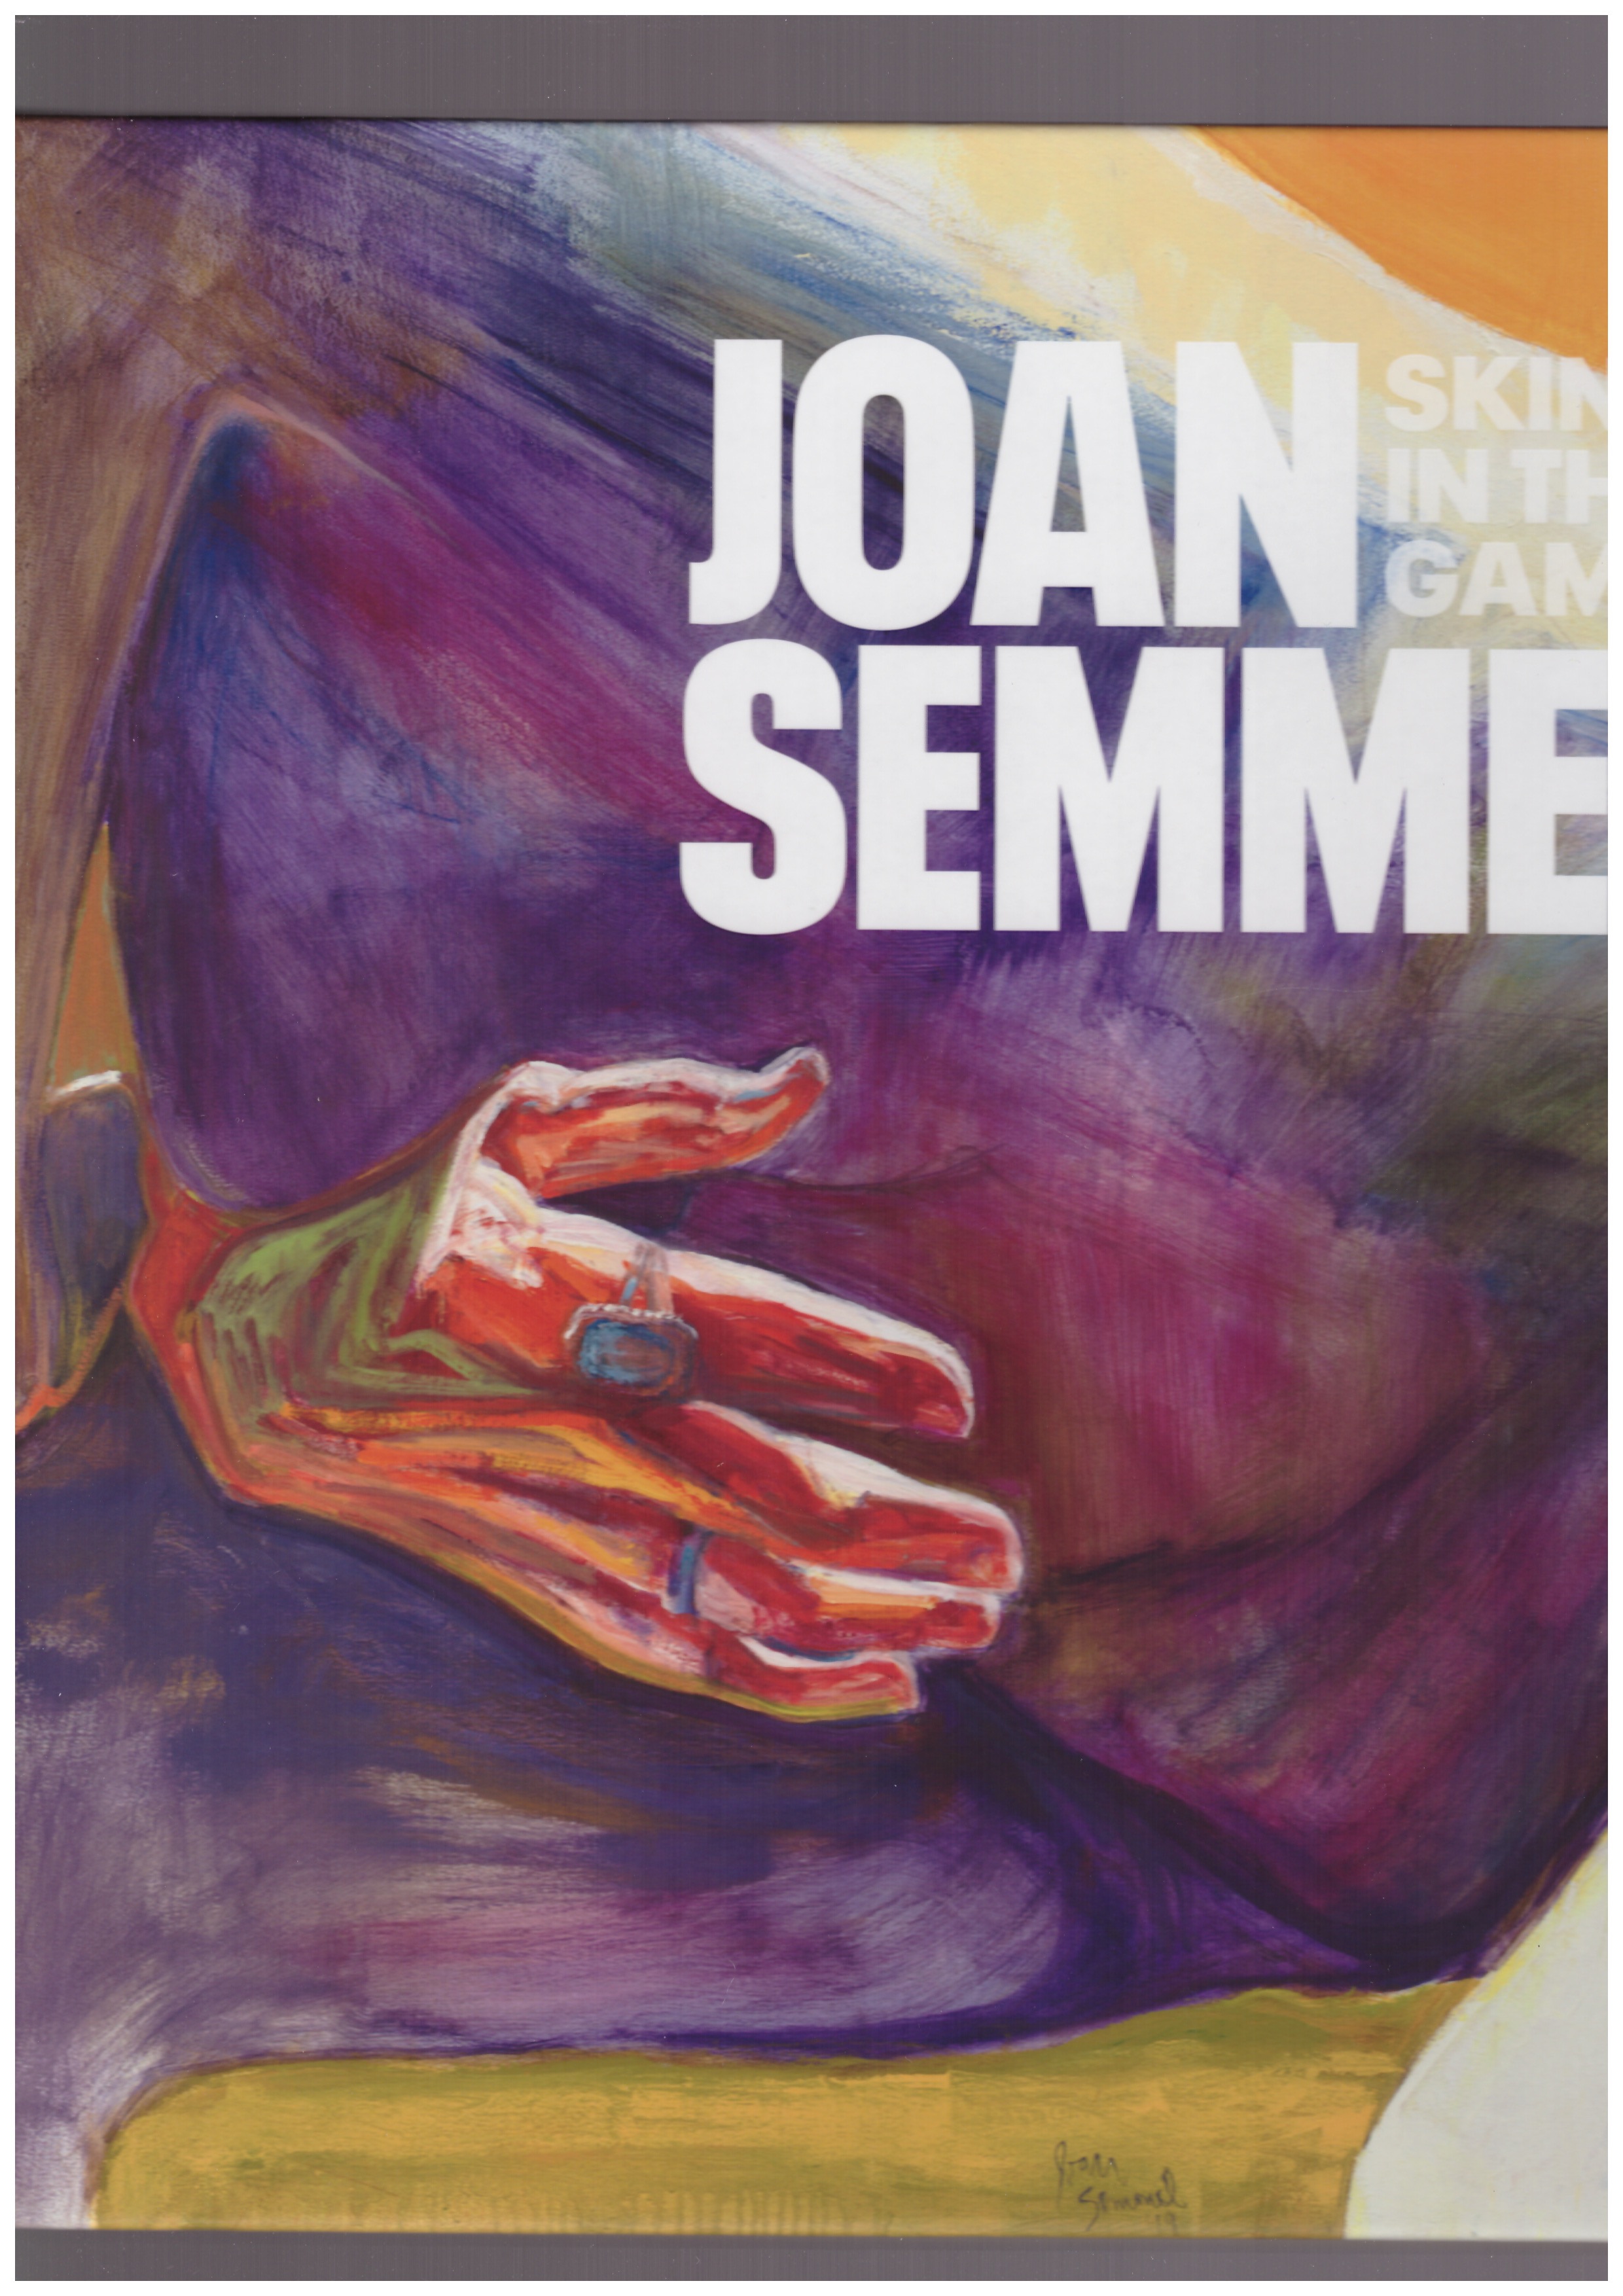 SEMMEL, Joan - Skin in the Game